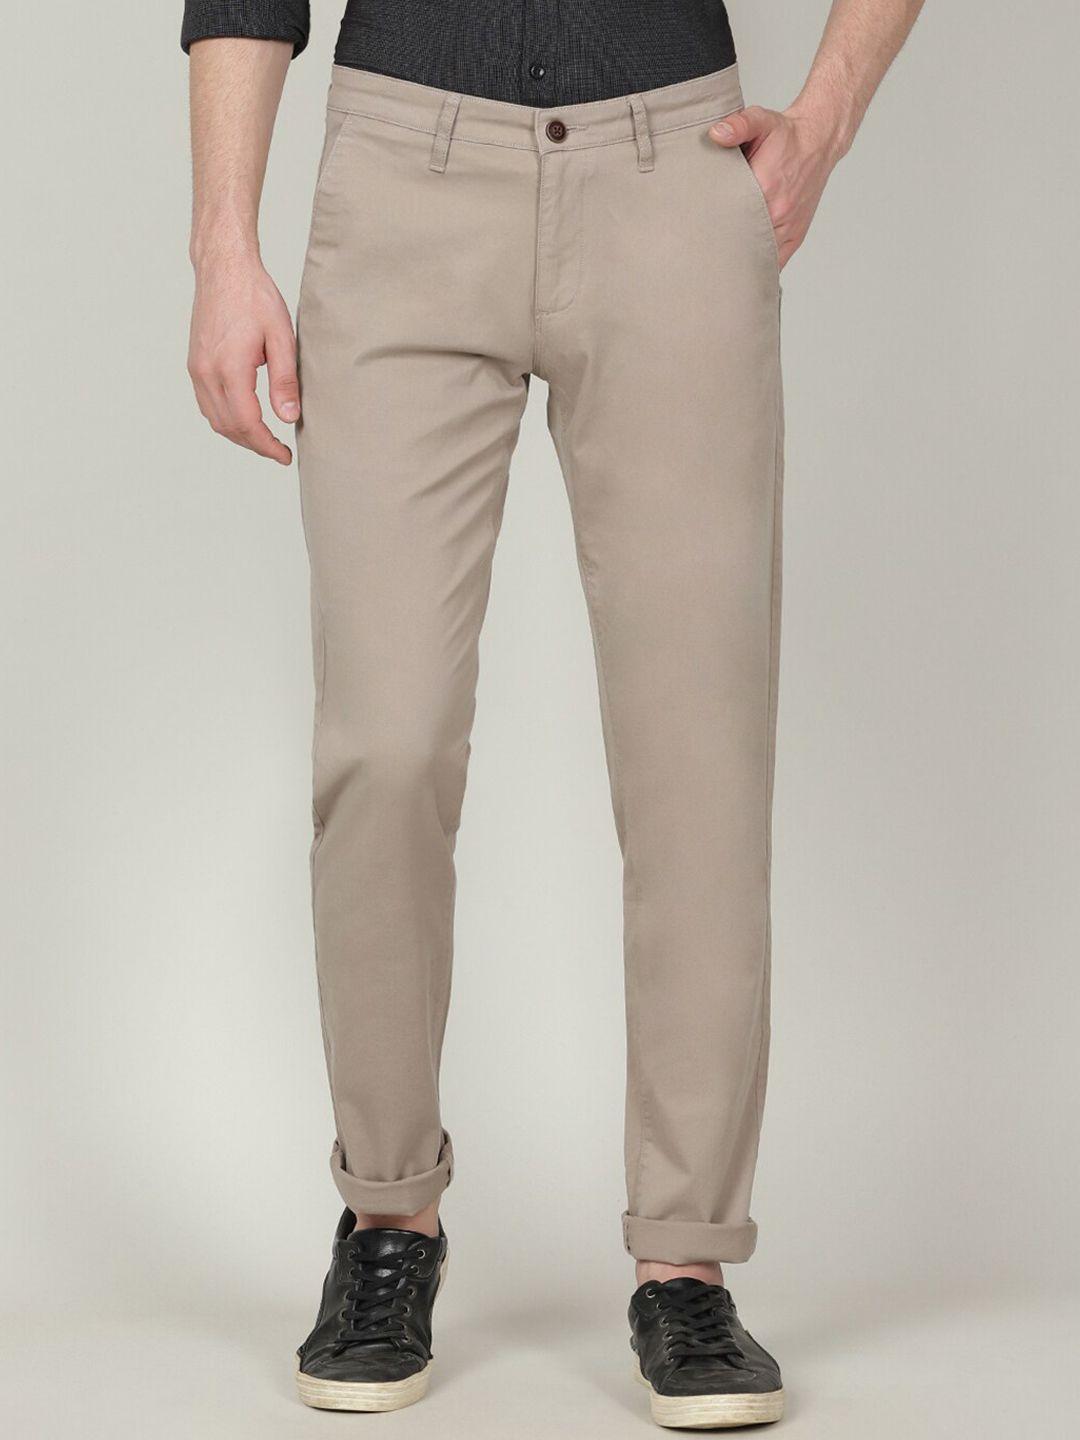 crocodile-men-cotton-tailored-slim-fit-trousers